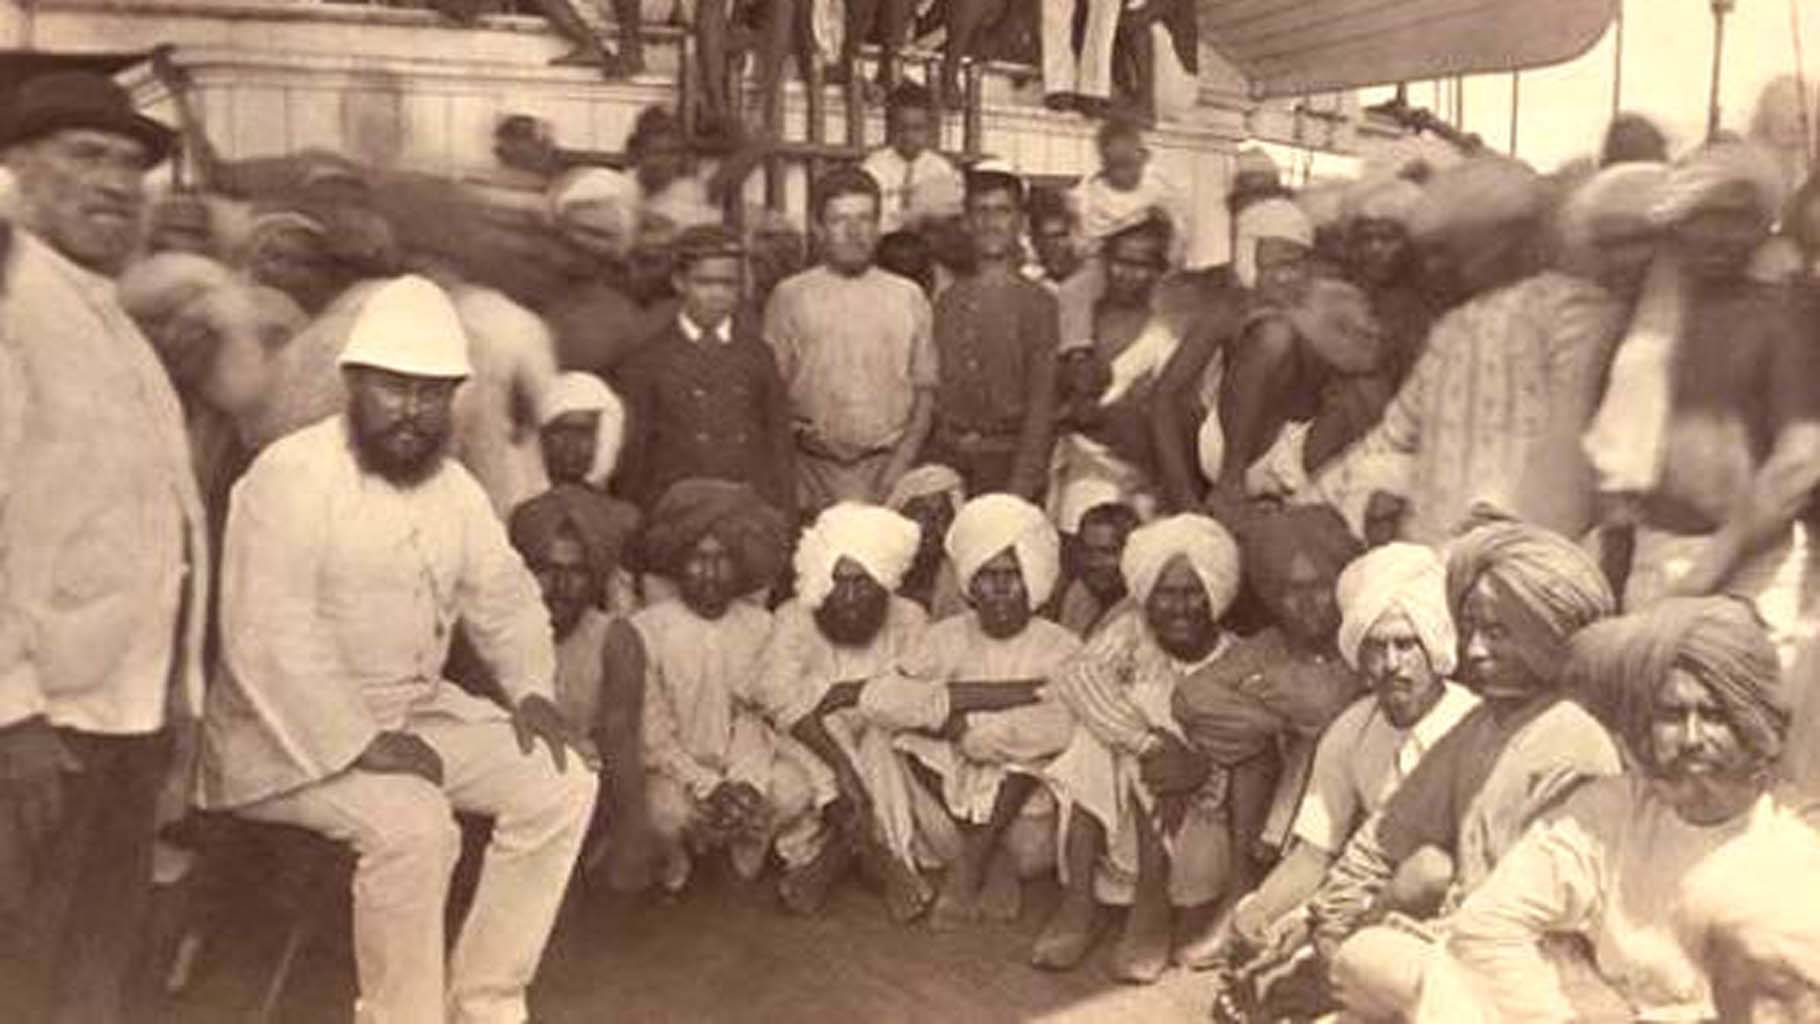 labourers from British India